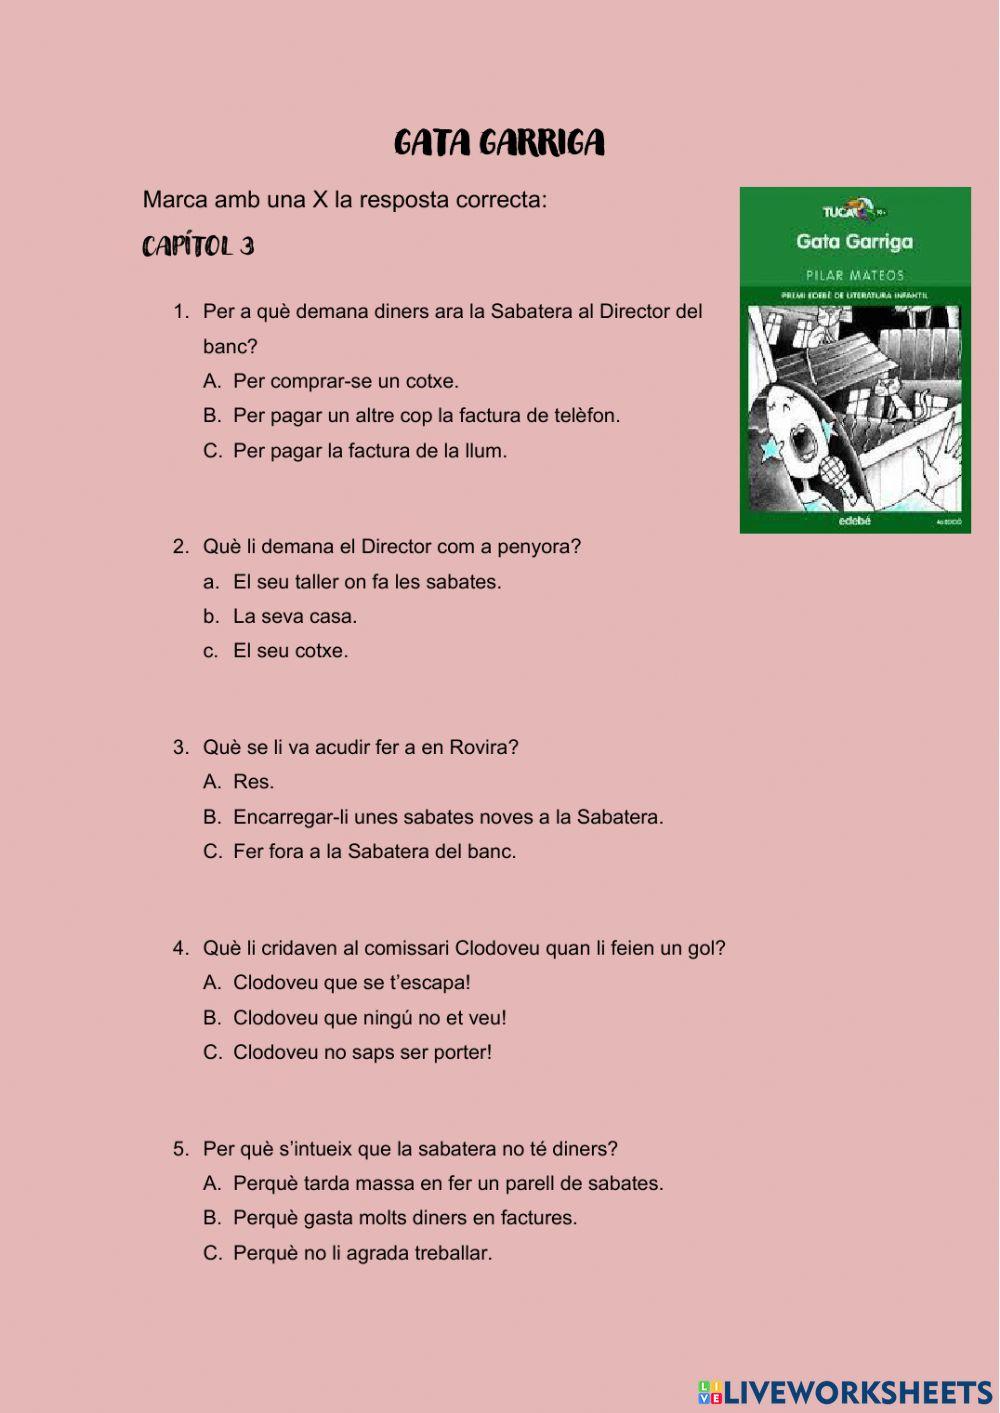 Gata Garriga (capítol 3) worksheet | Live Worksheets